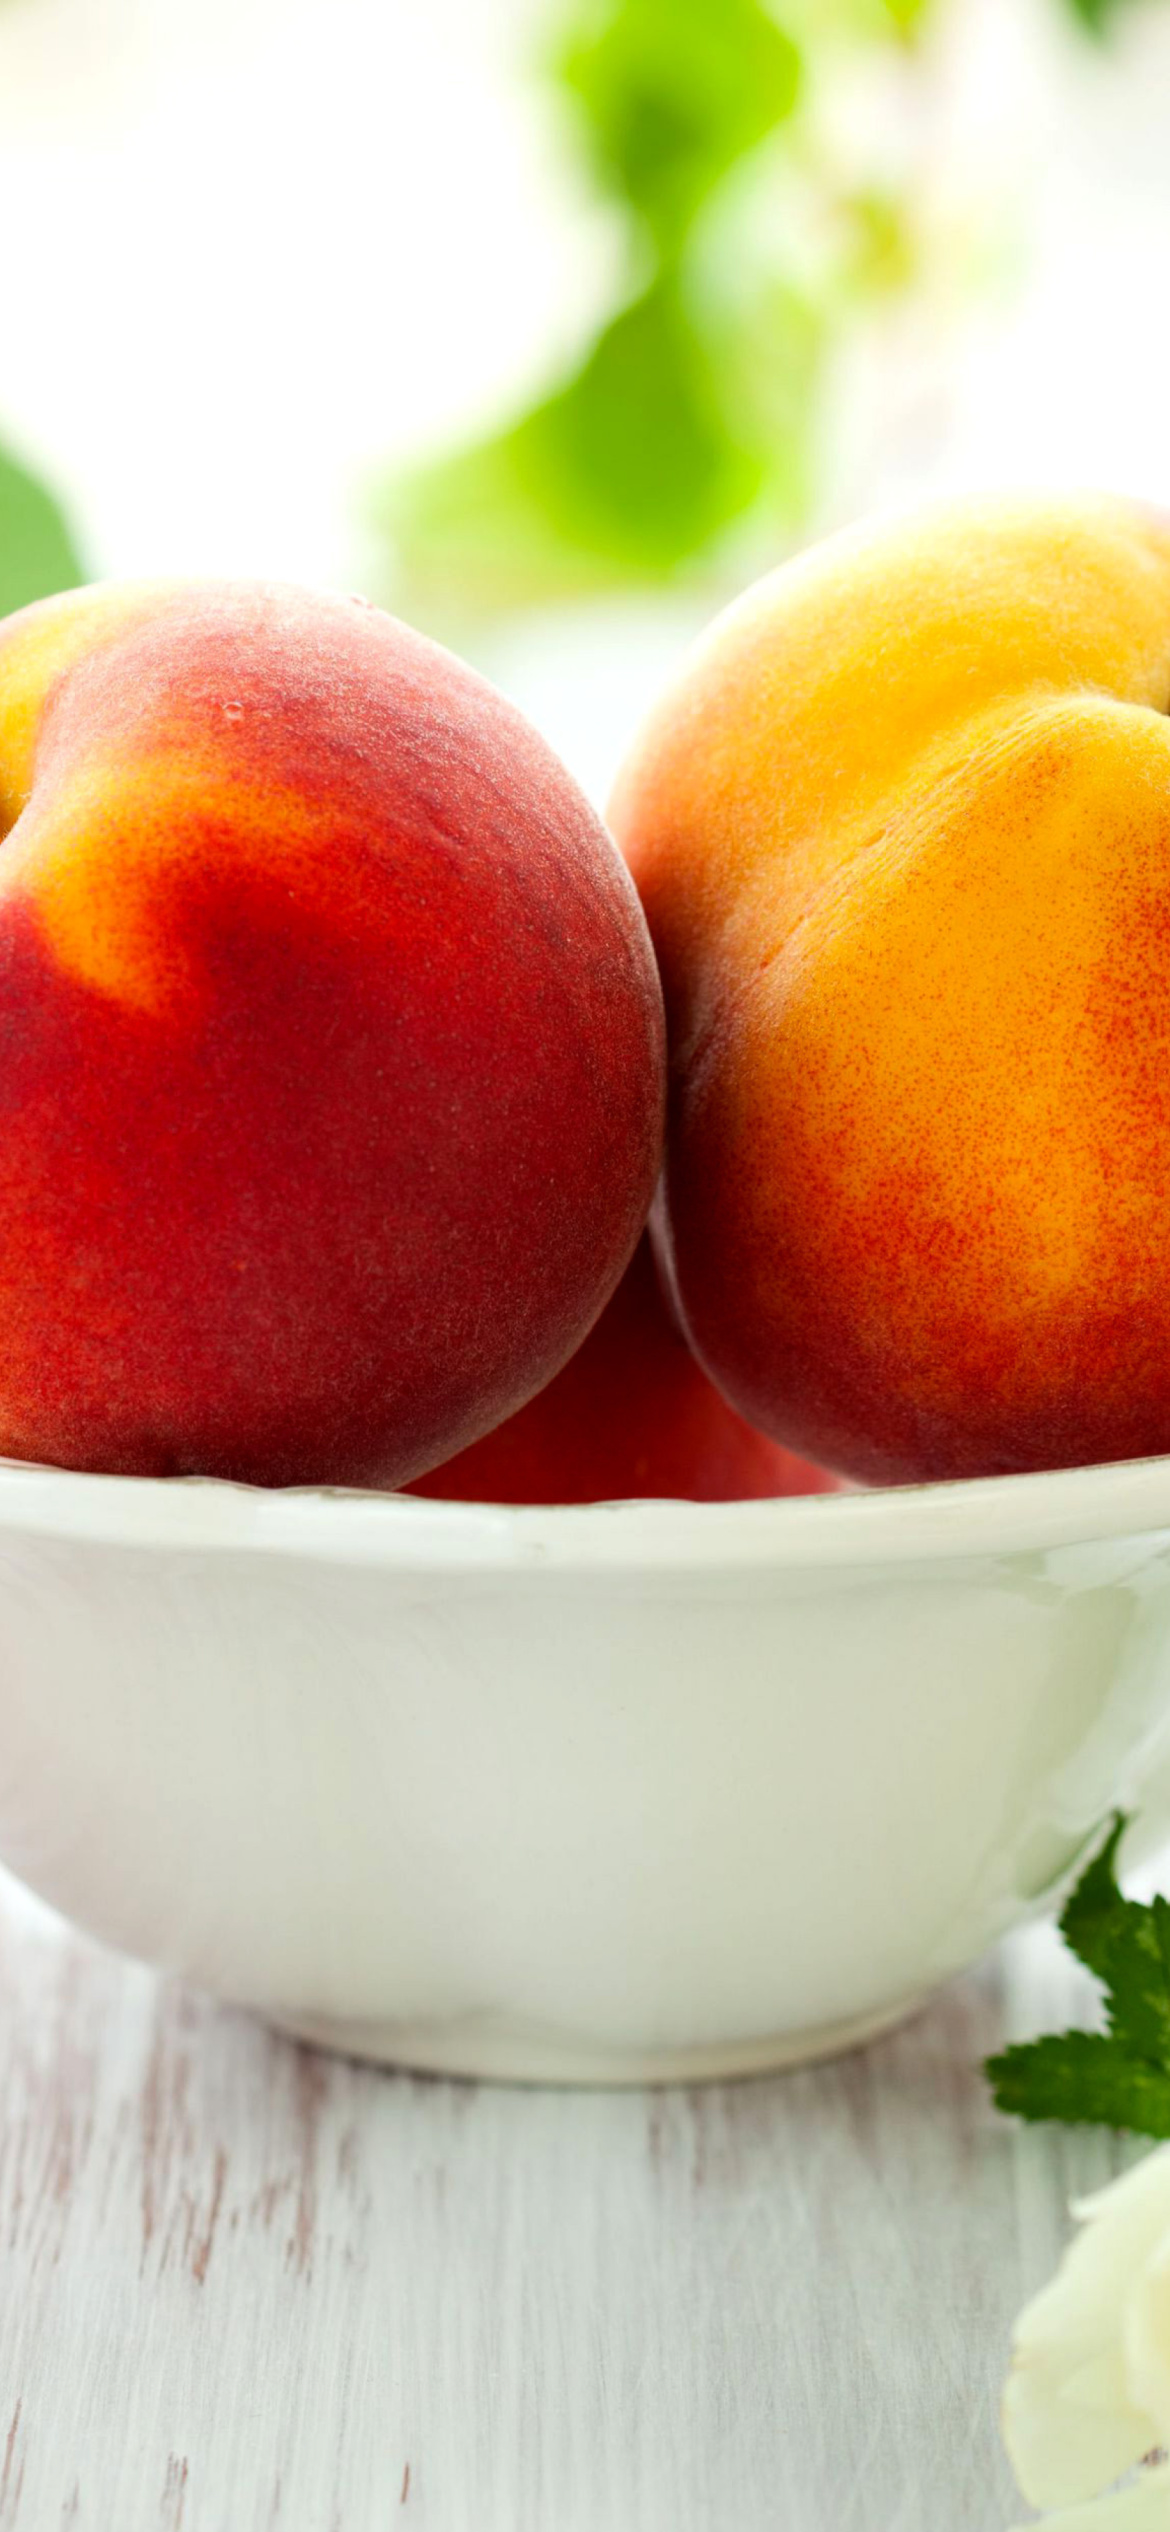 Nectarines and Peaches wallpaper 1170x2532